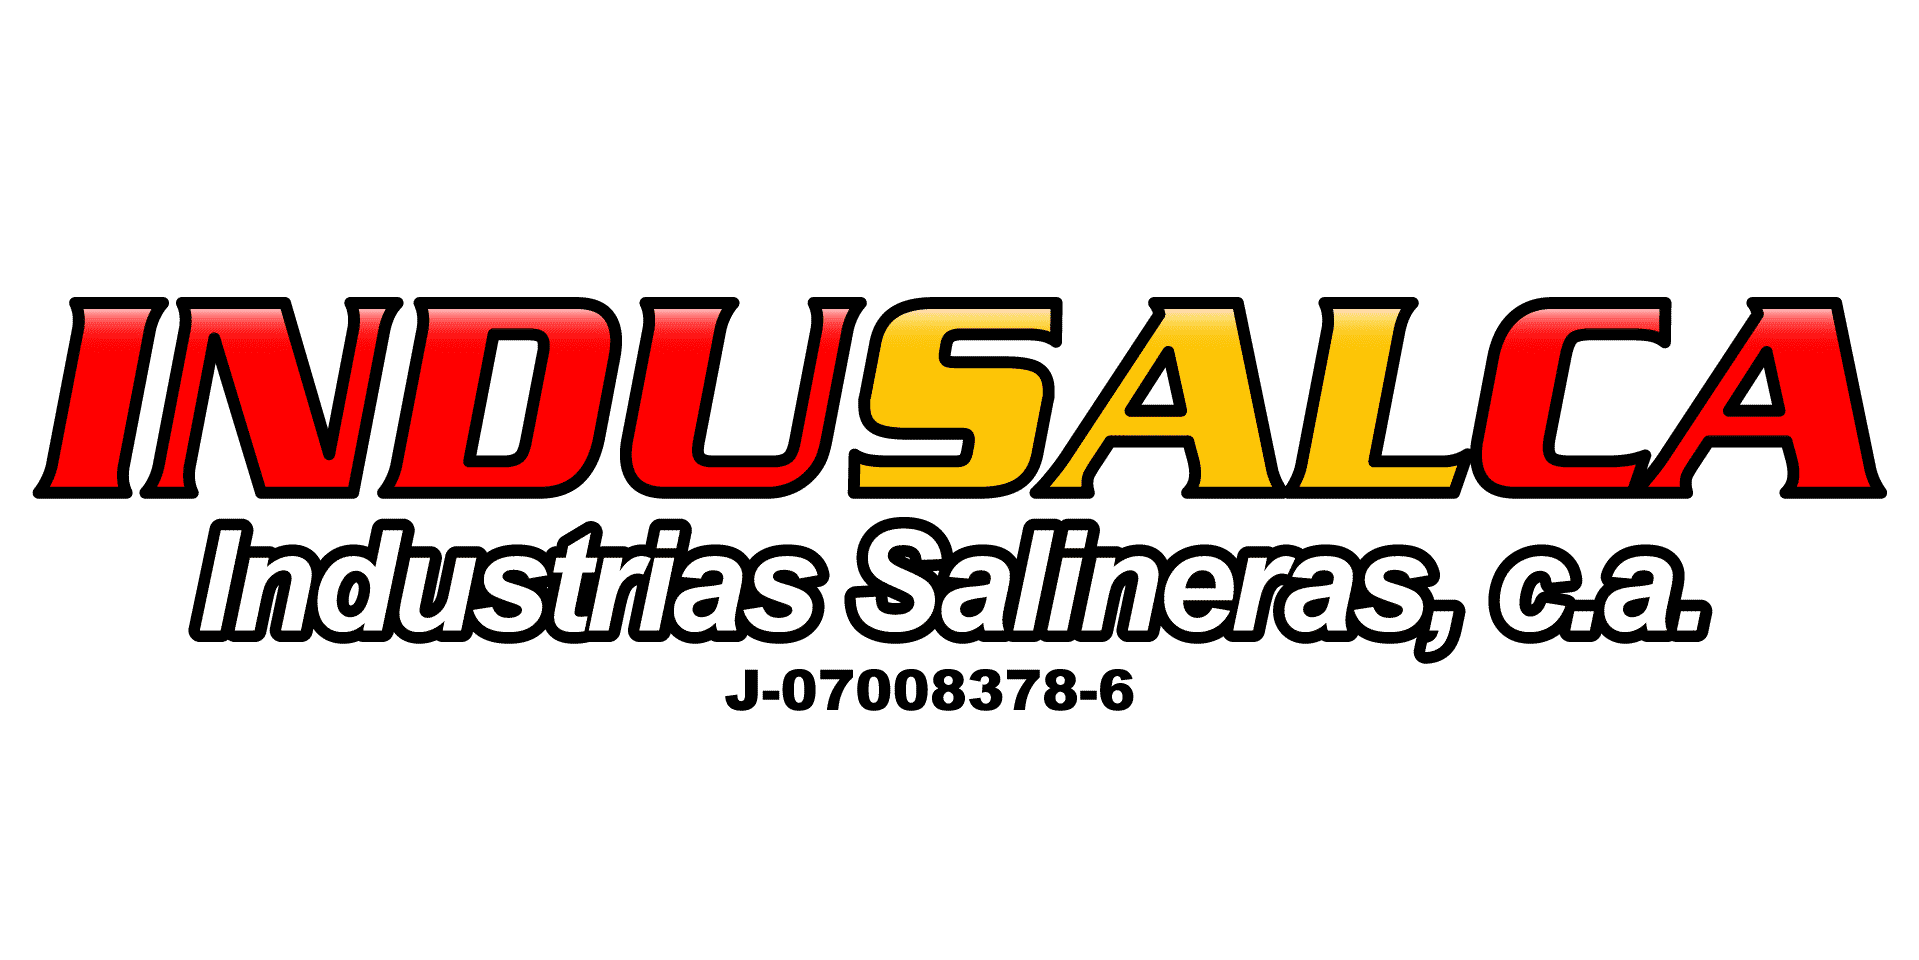 Industrias Kola Loka S.A de C.V. (Industrias Kola Loka) - BNamericas